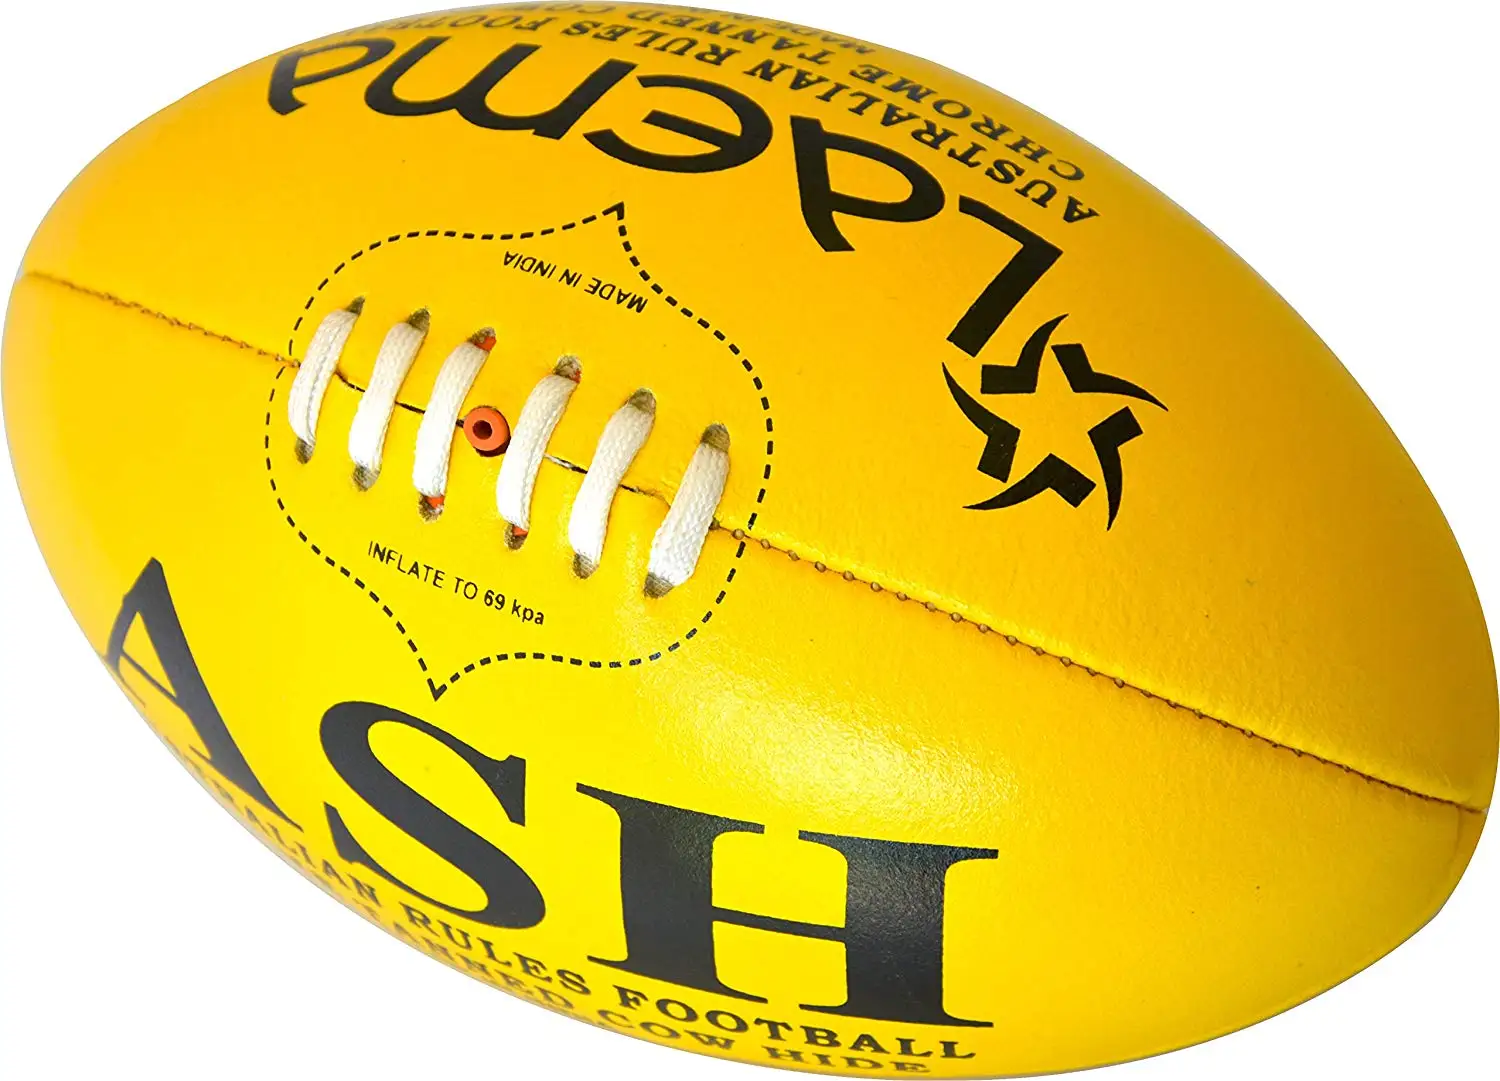 Match quality. Австралийский футбол мяч. Hungry Yellow Ball. Australia Ball. Aussie Rules Footy.